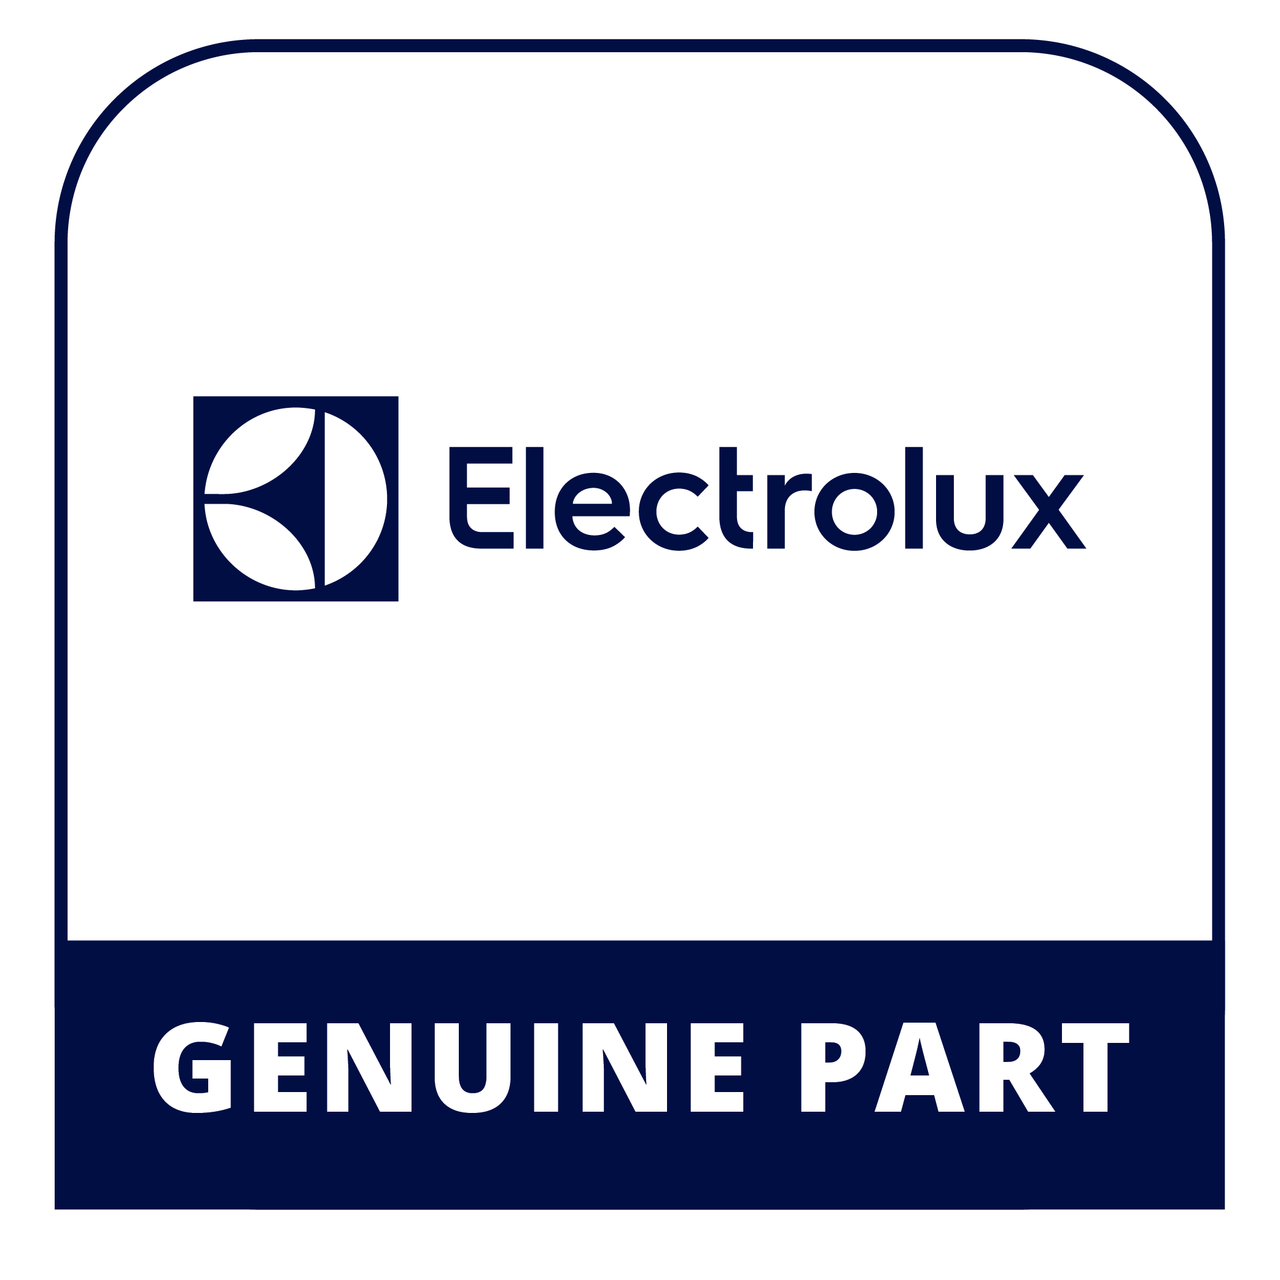 Frigidaire - Electrolux 242074214 - S/A Pur-I&W Module - Genuine Electrolux Part